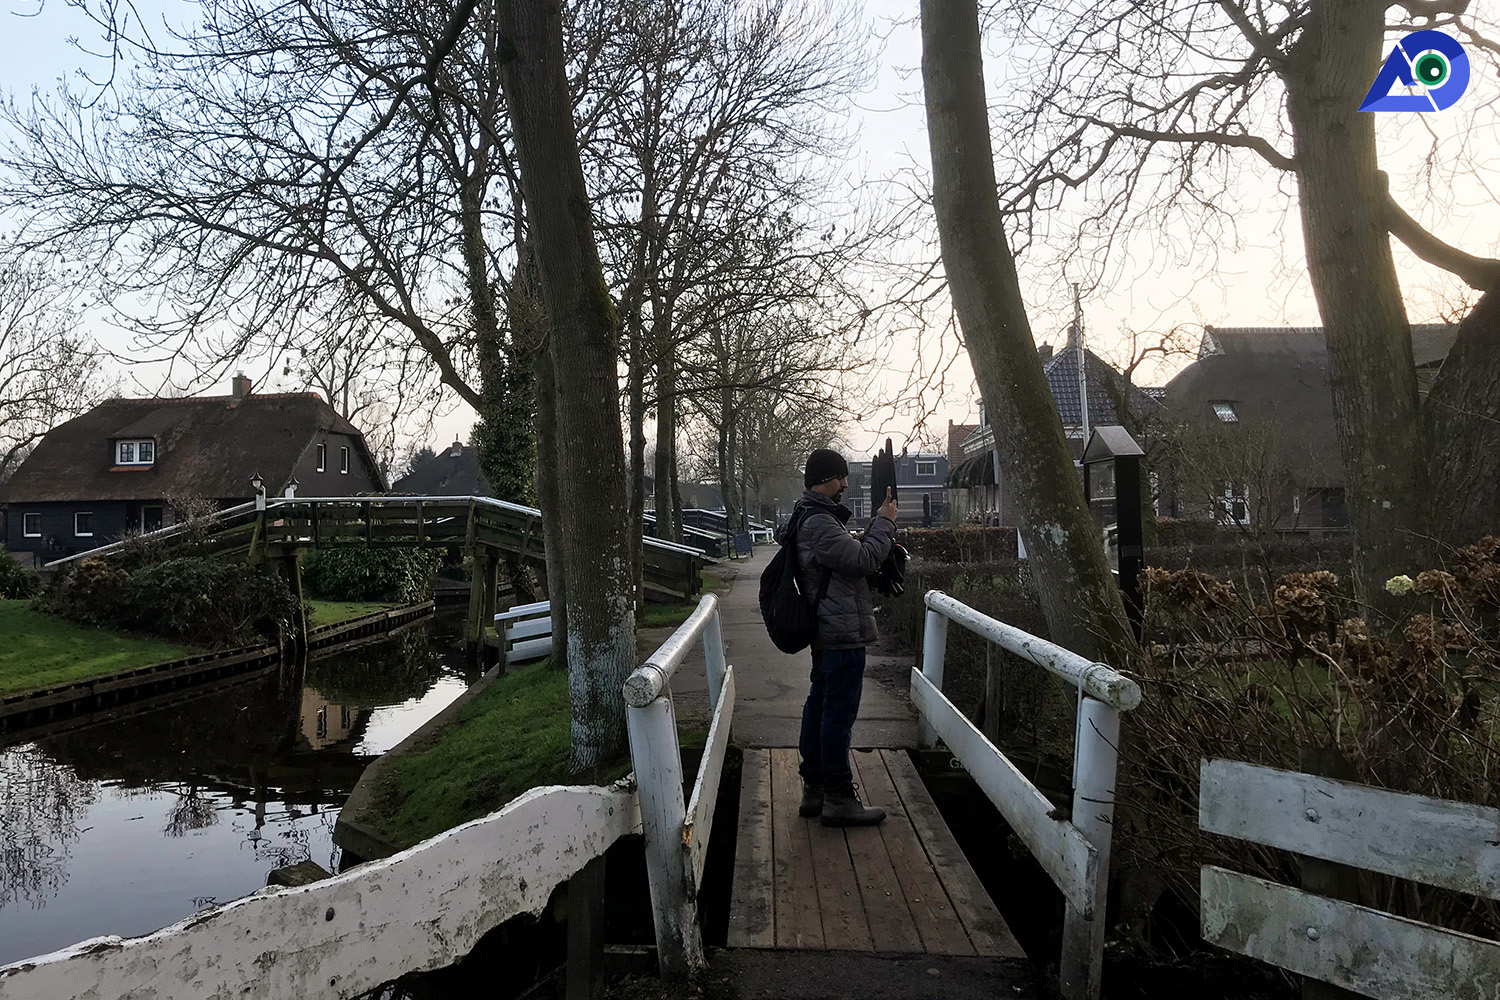 Streets of Giethoorn 2